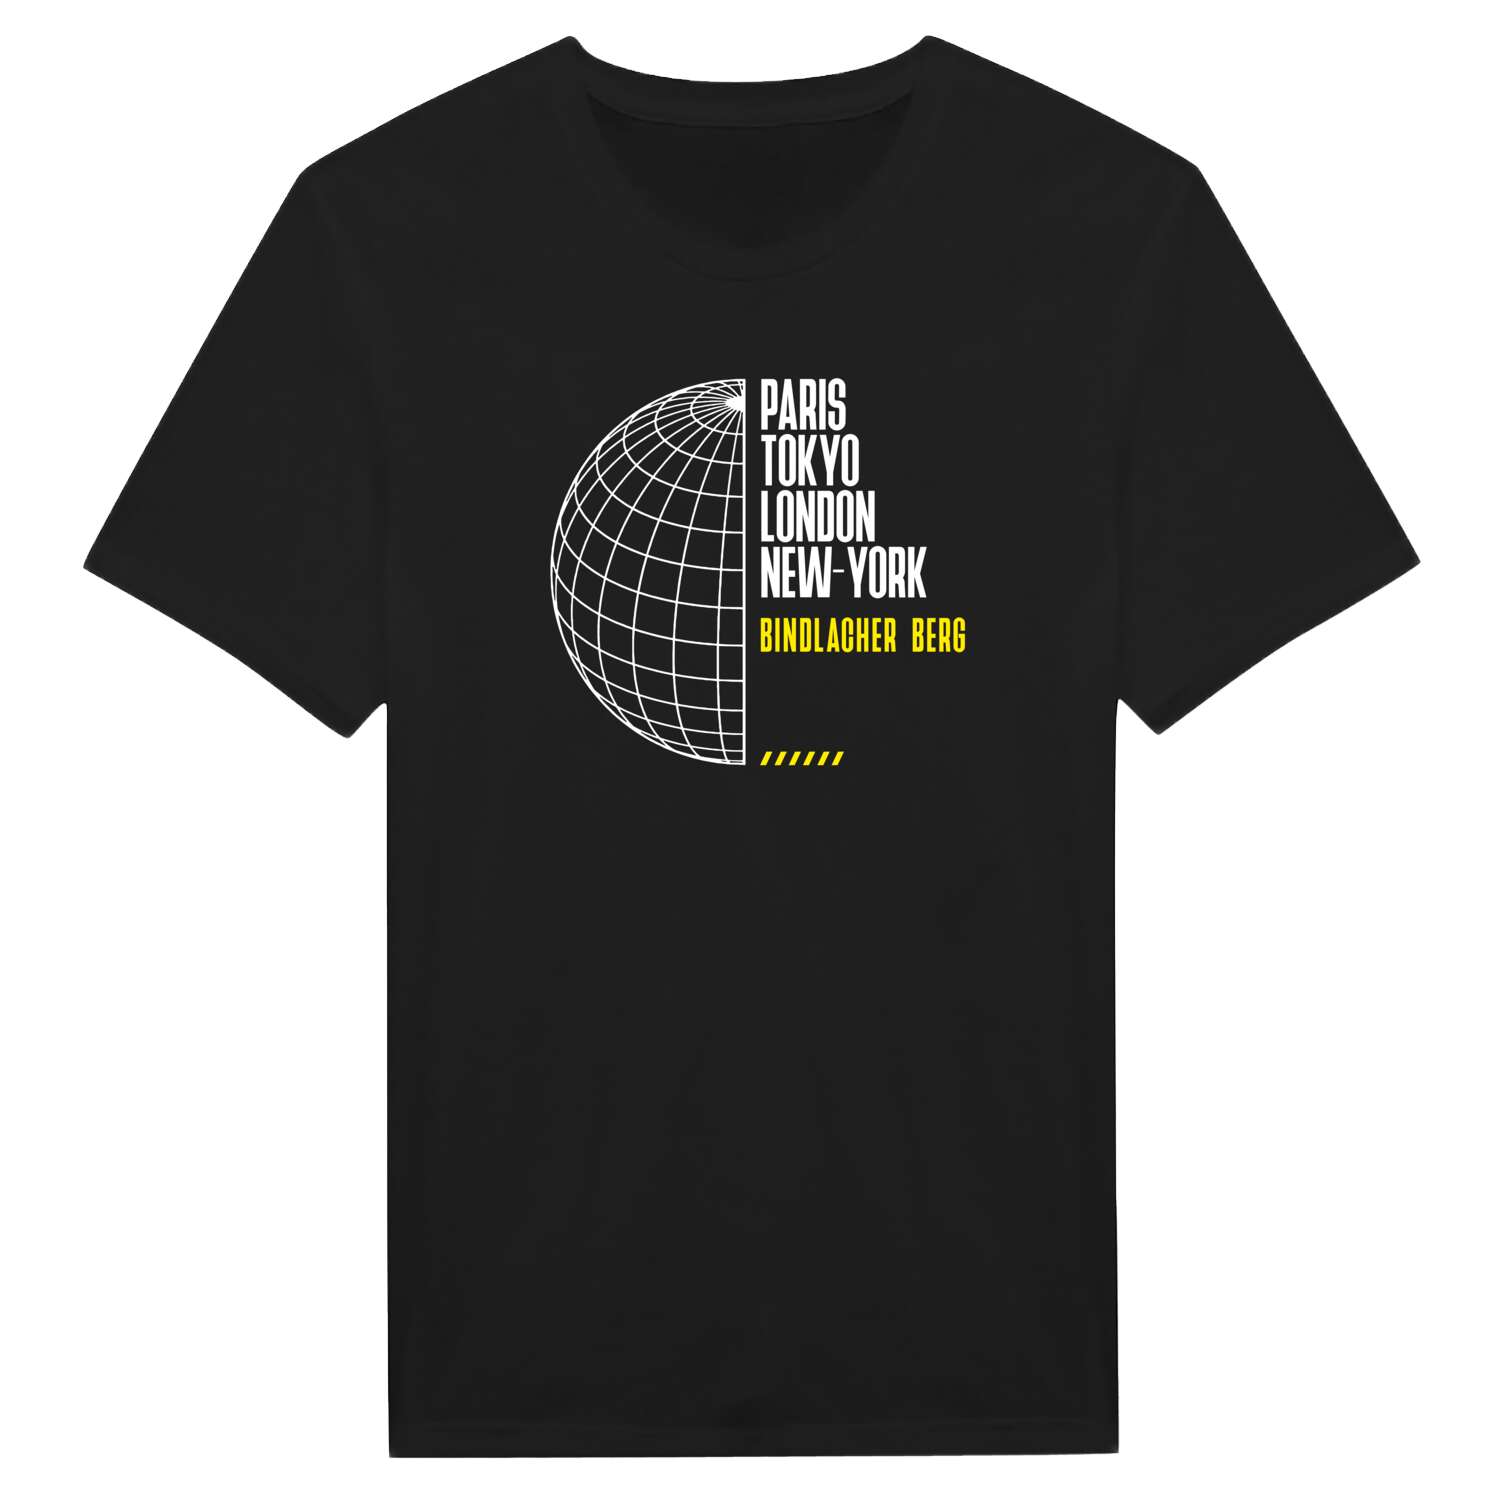 Bindlacher Berg T-Shirt »Paris Tokyo London«